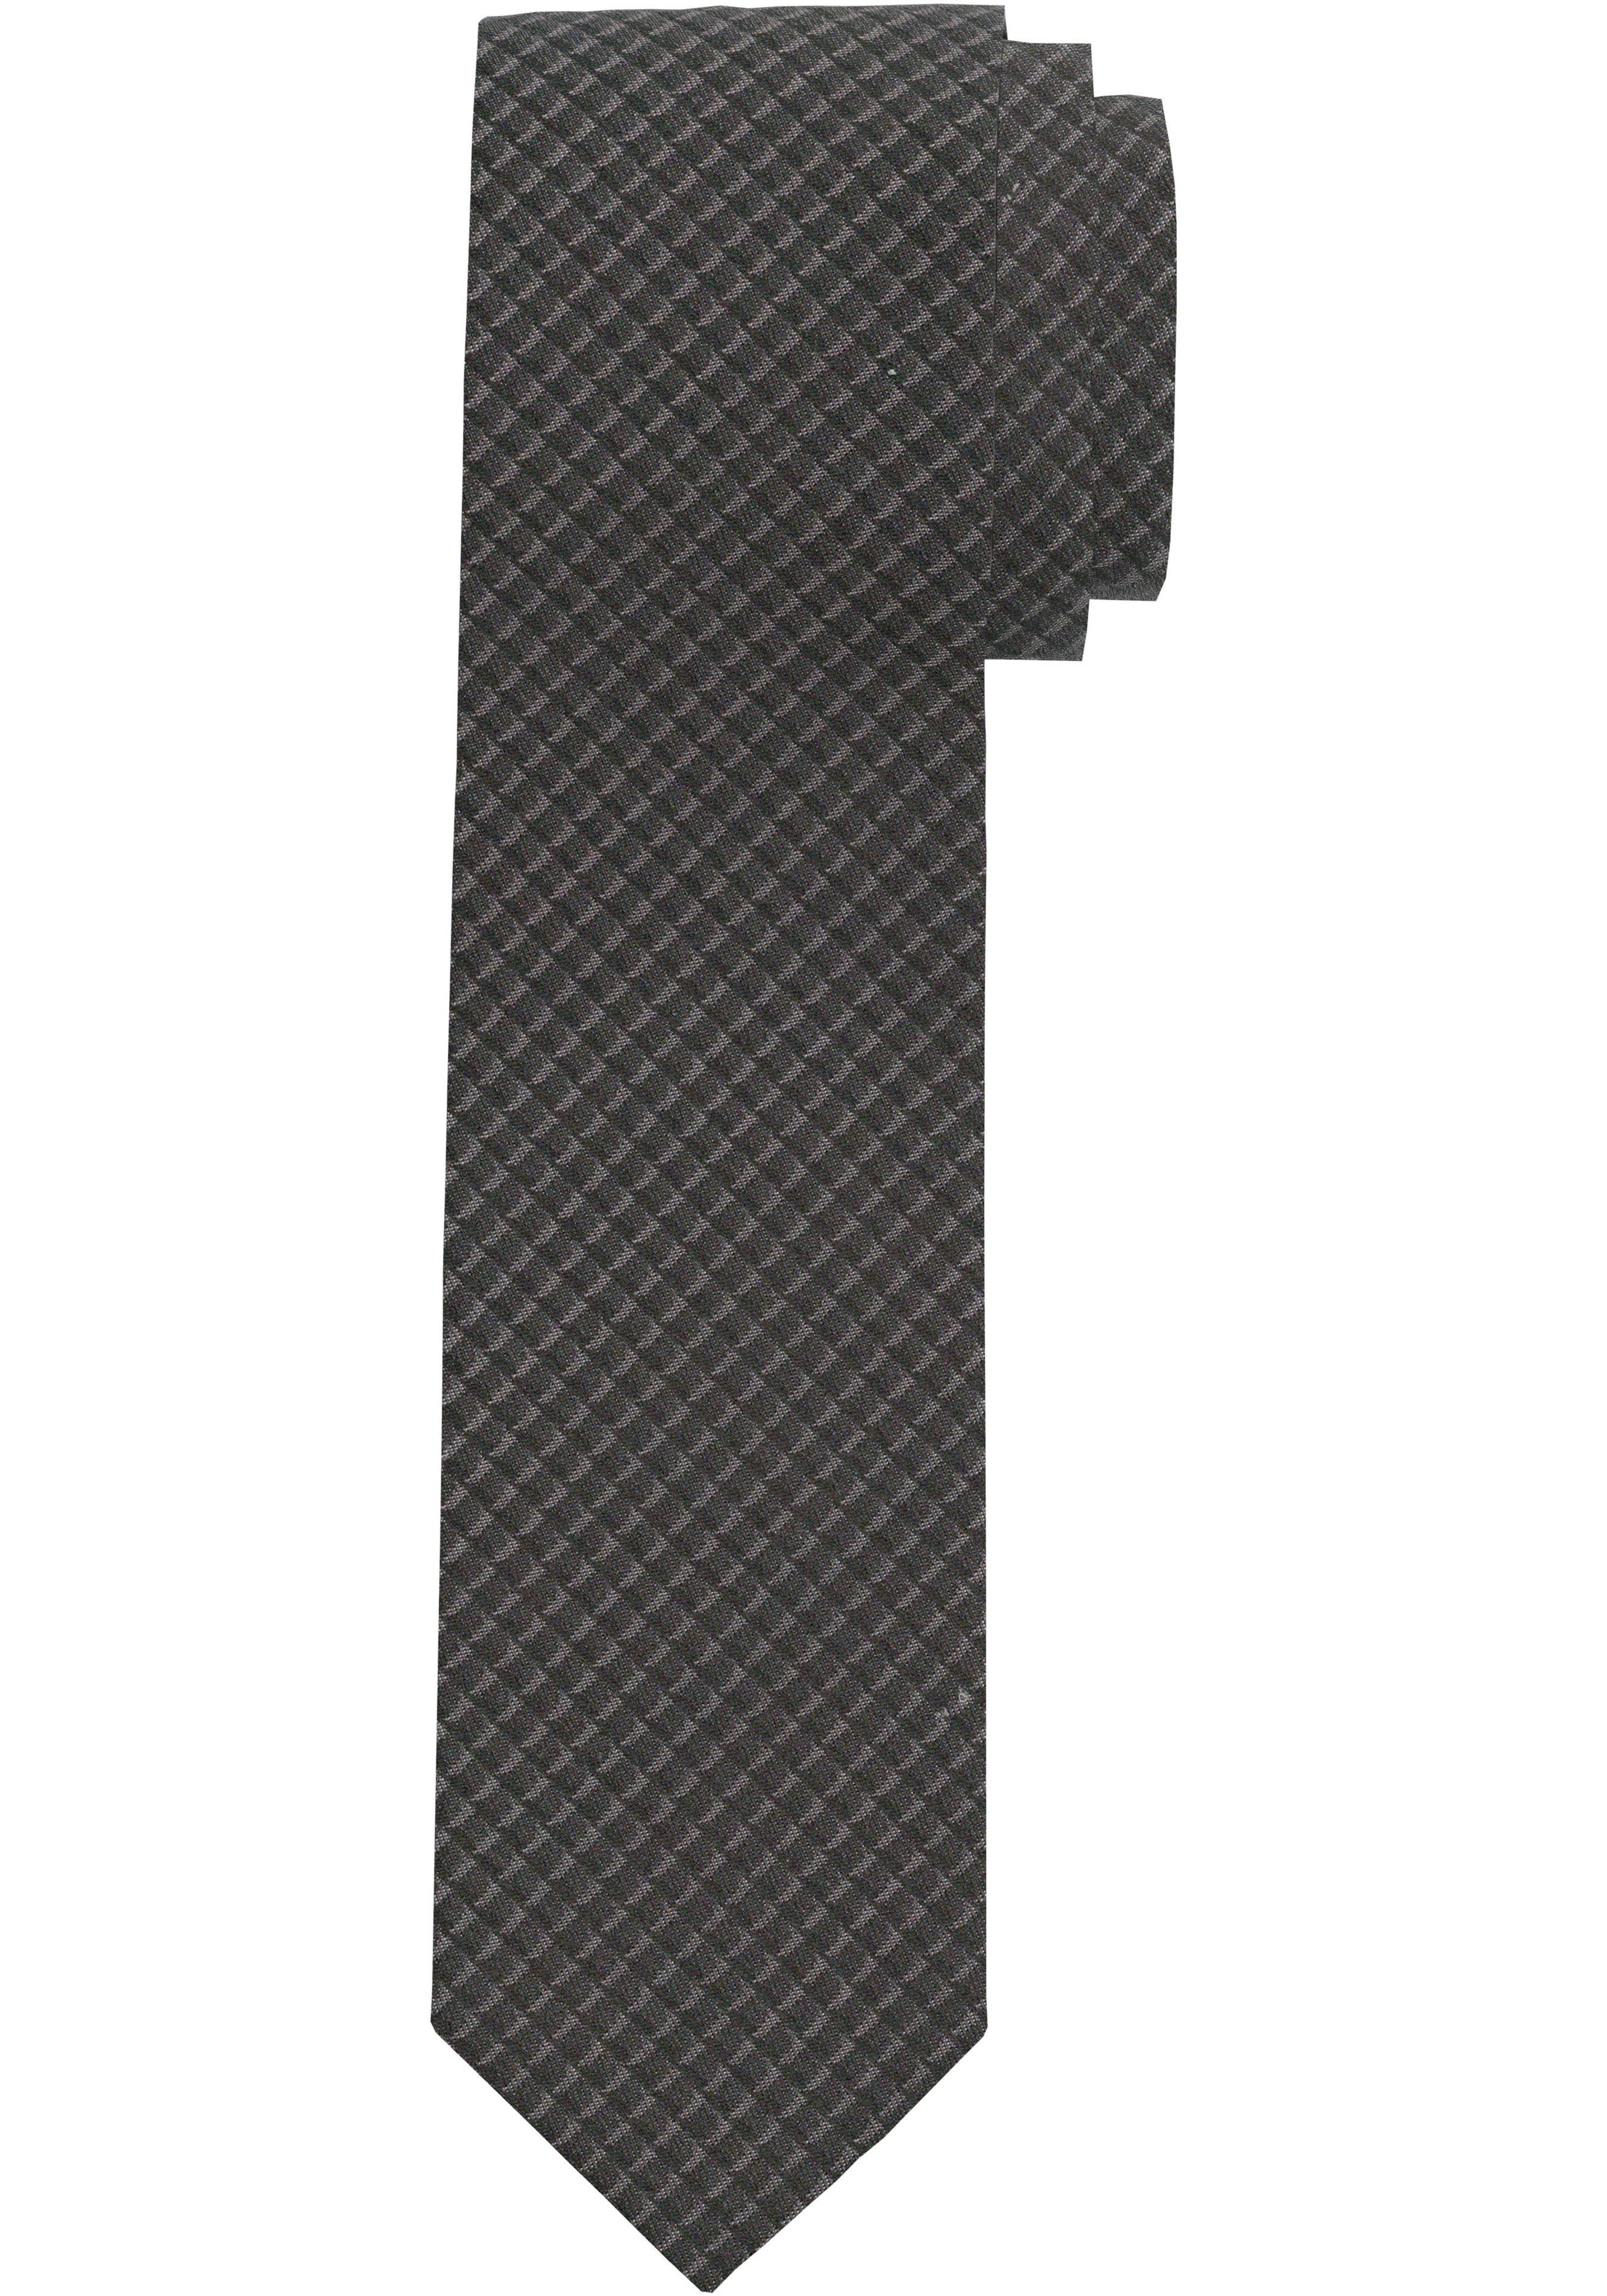 OLYMP Krawatte mit Strukturmuster Krawatte